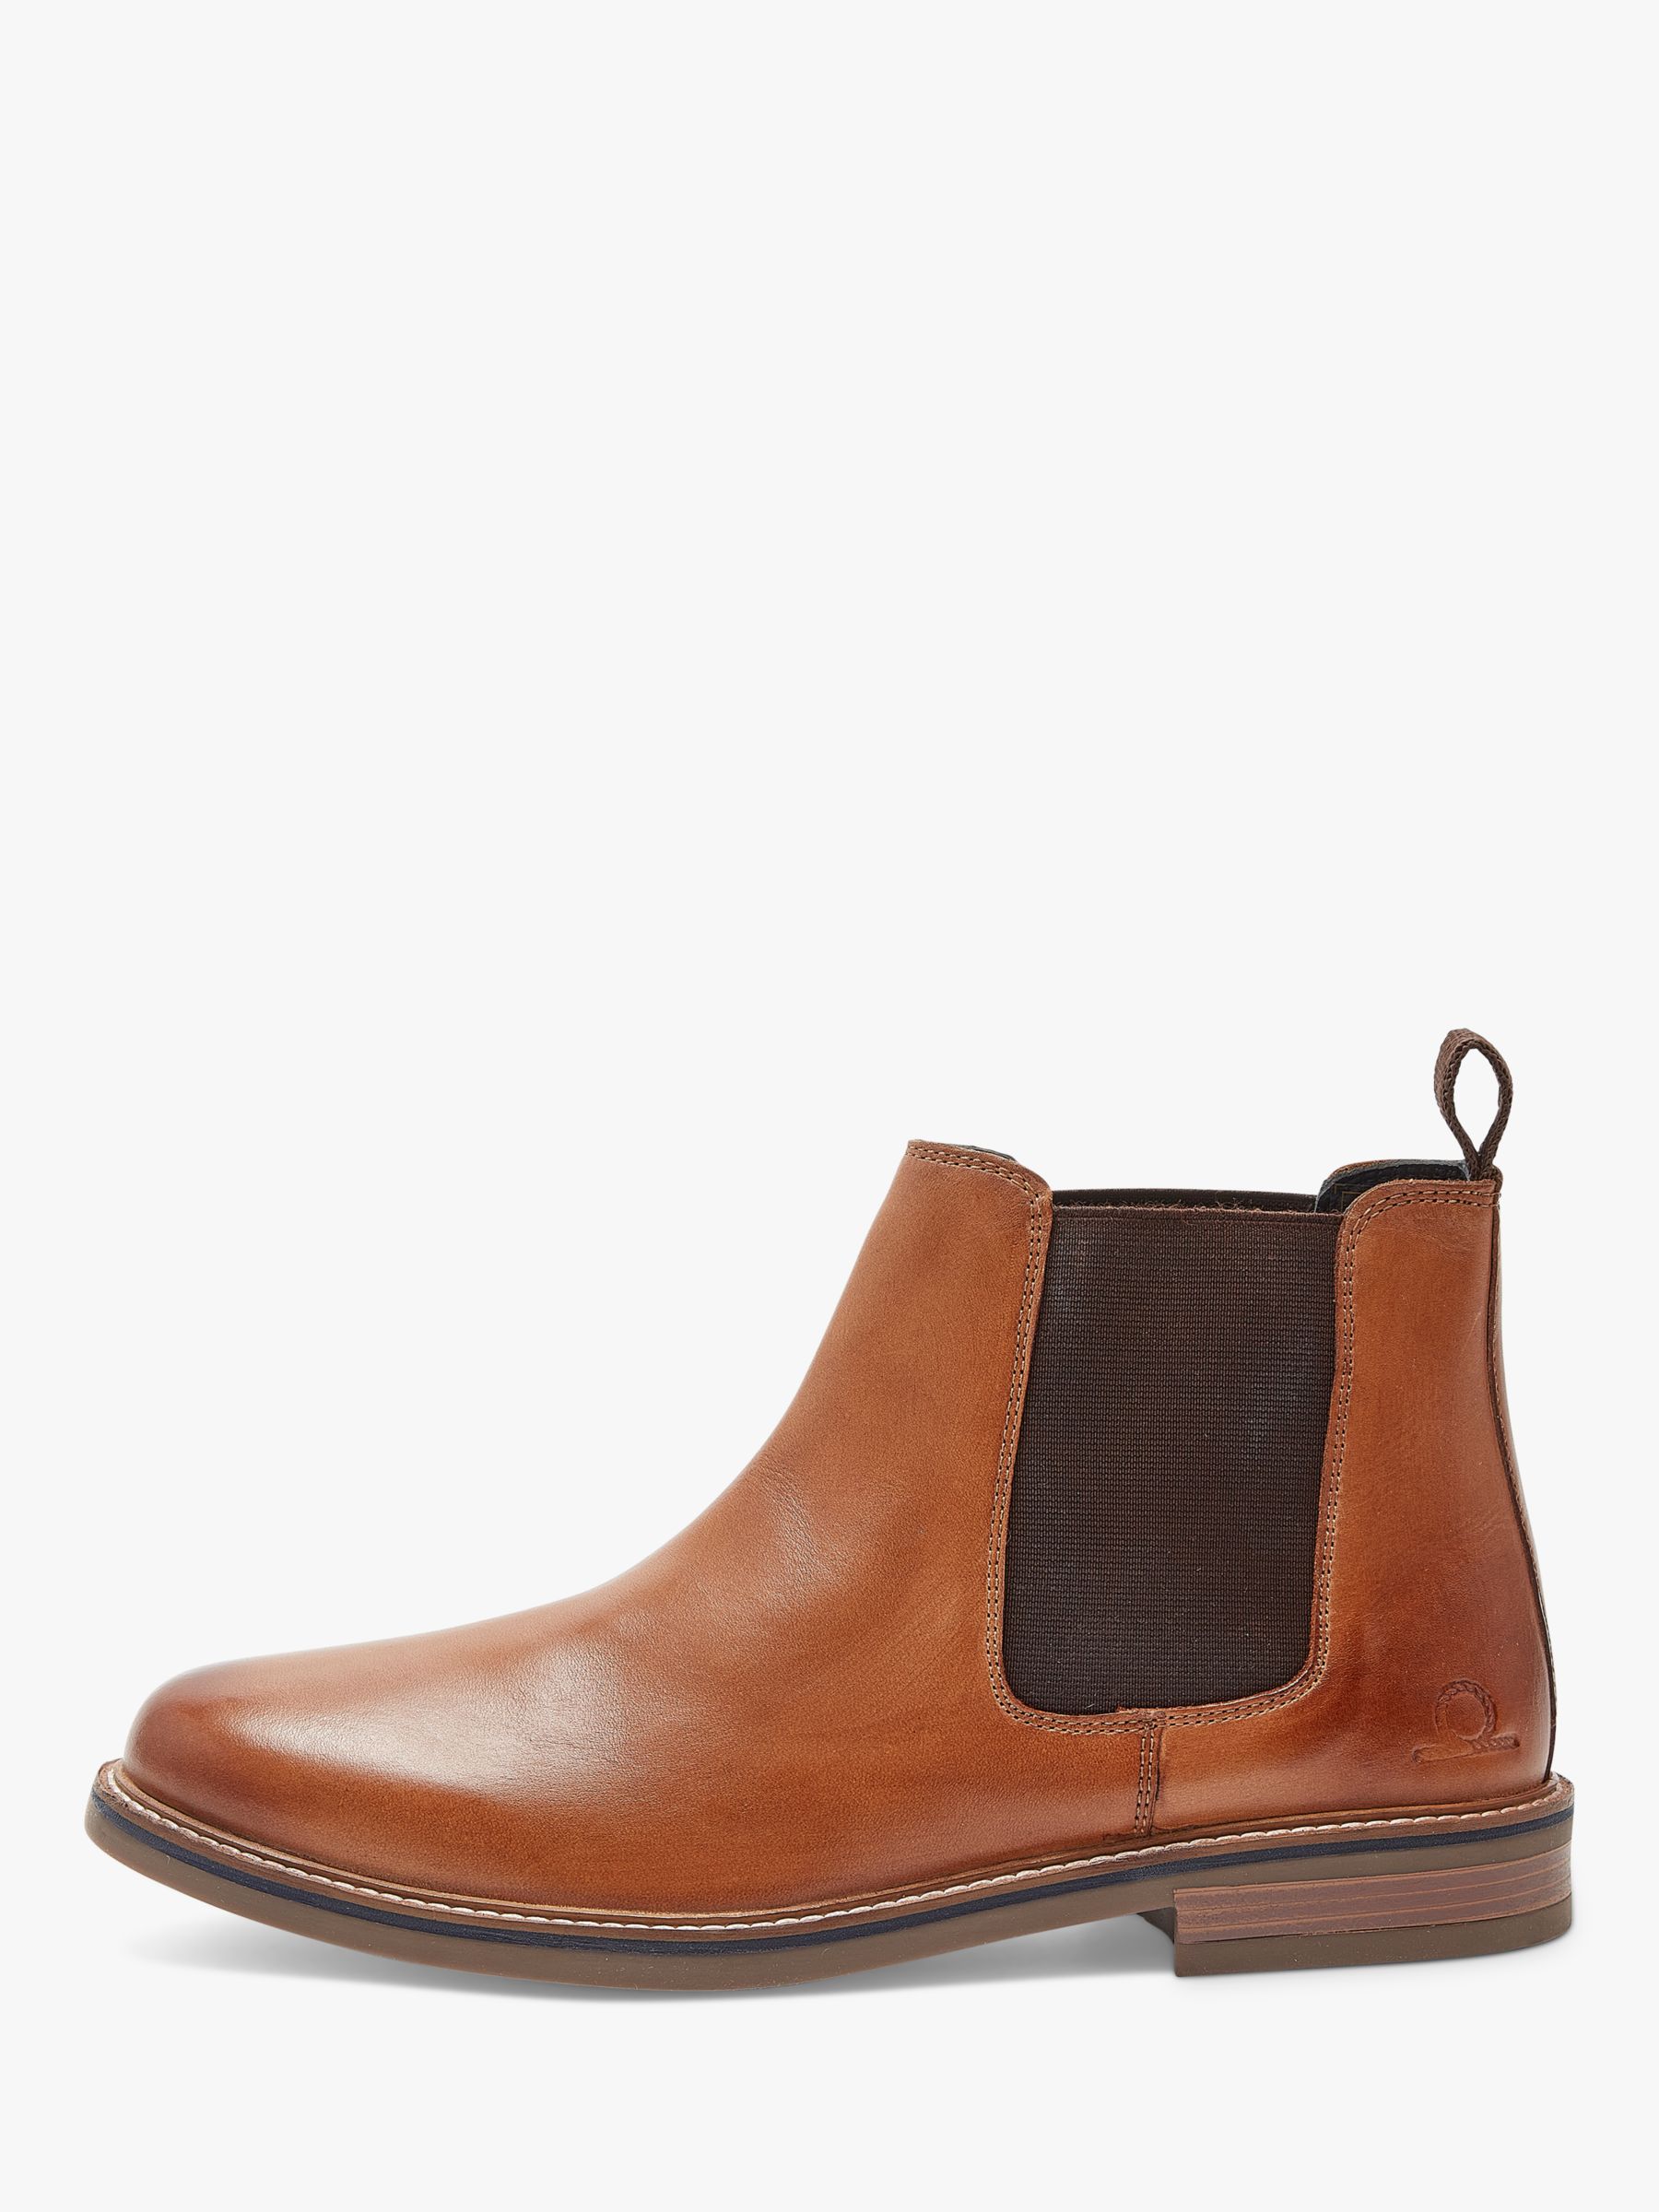 Chatham Scaffell Leather Chukka Boots, Tan, 11